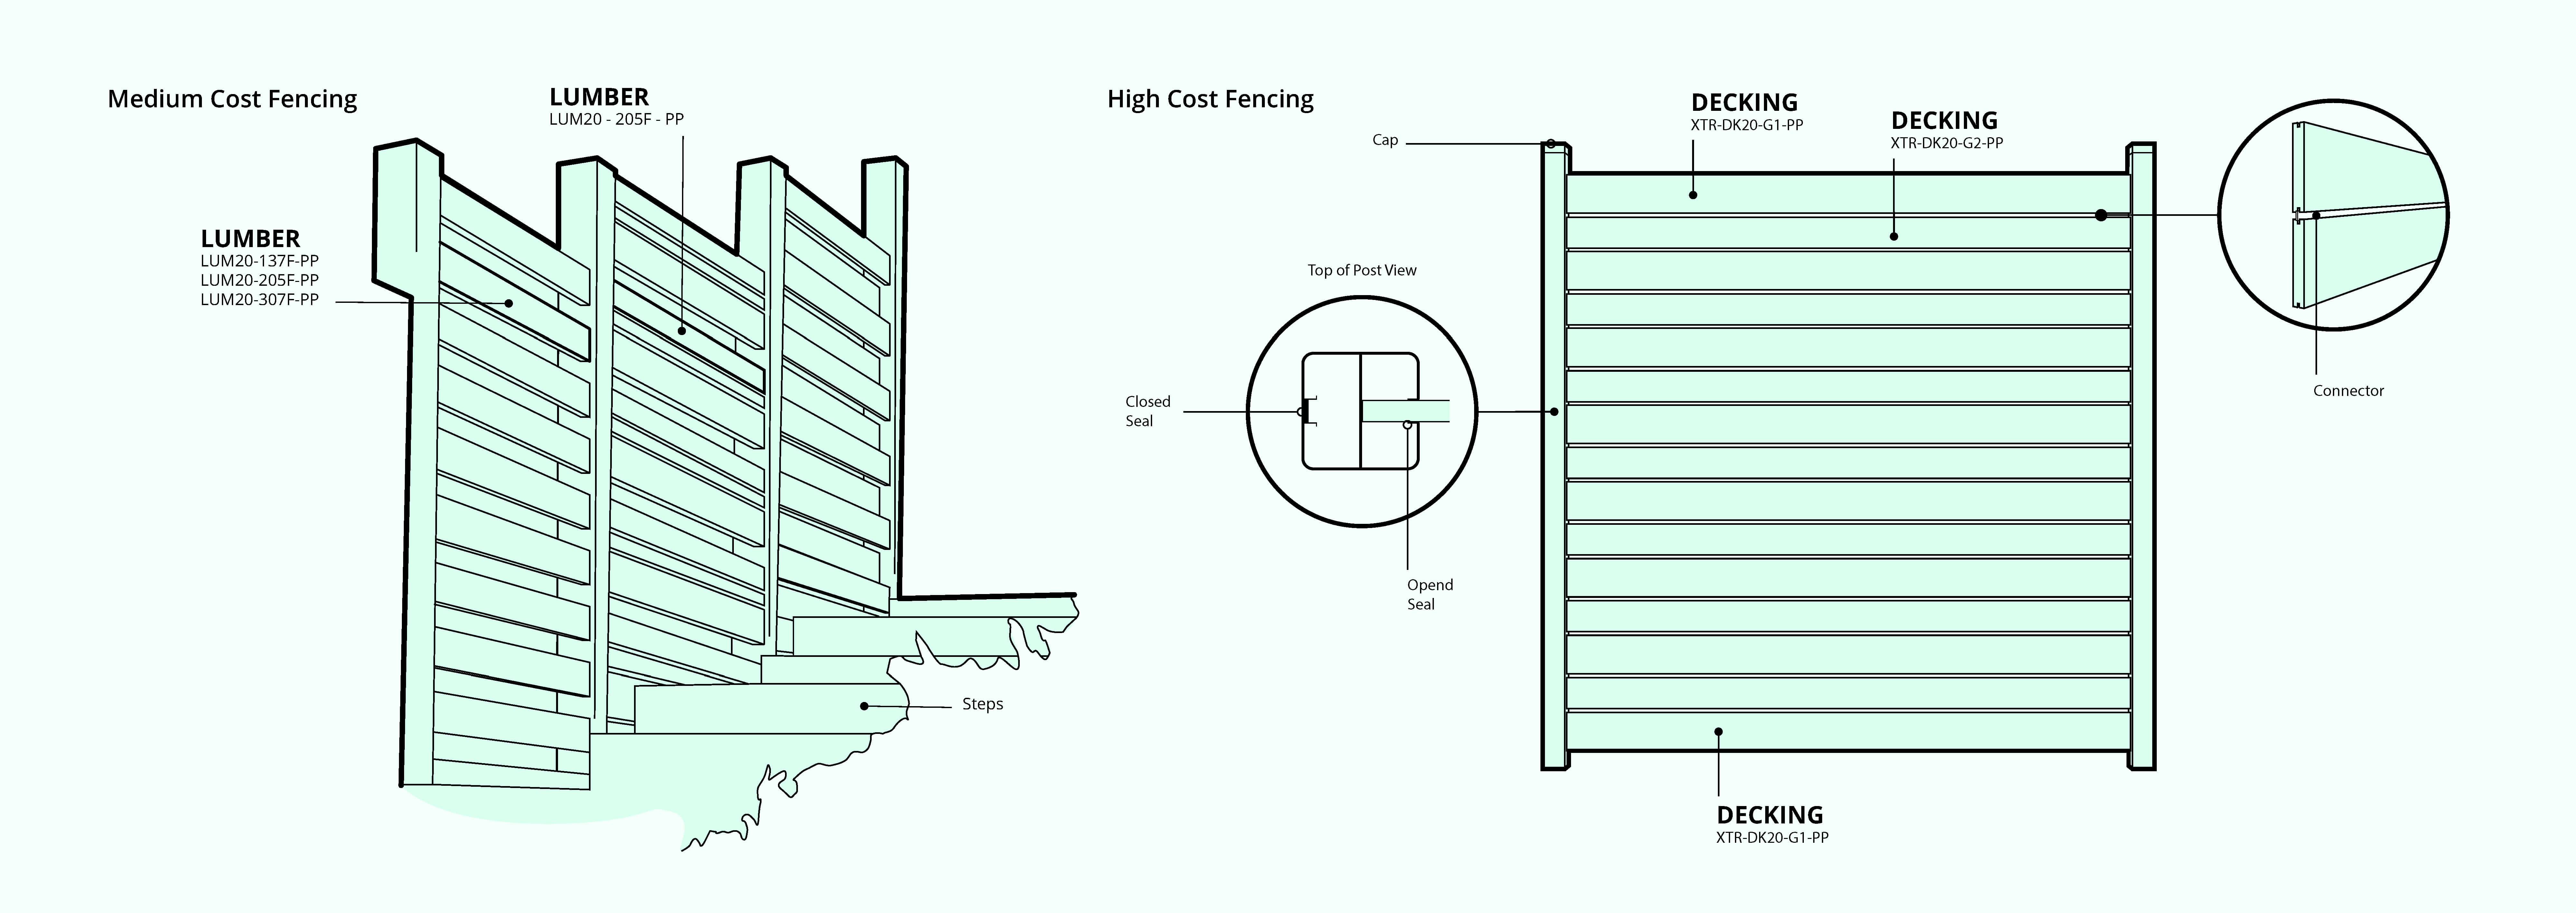 fencing design layout